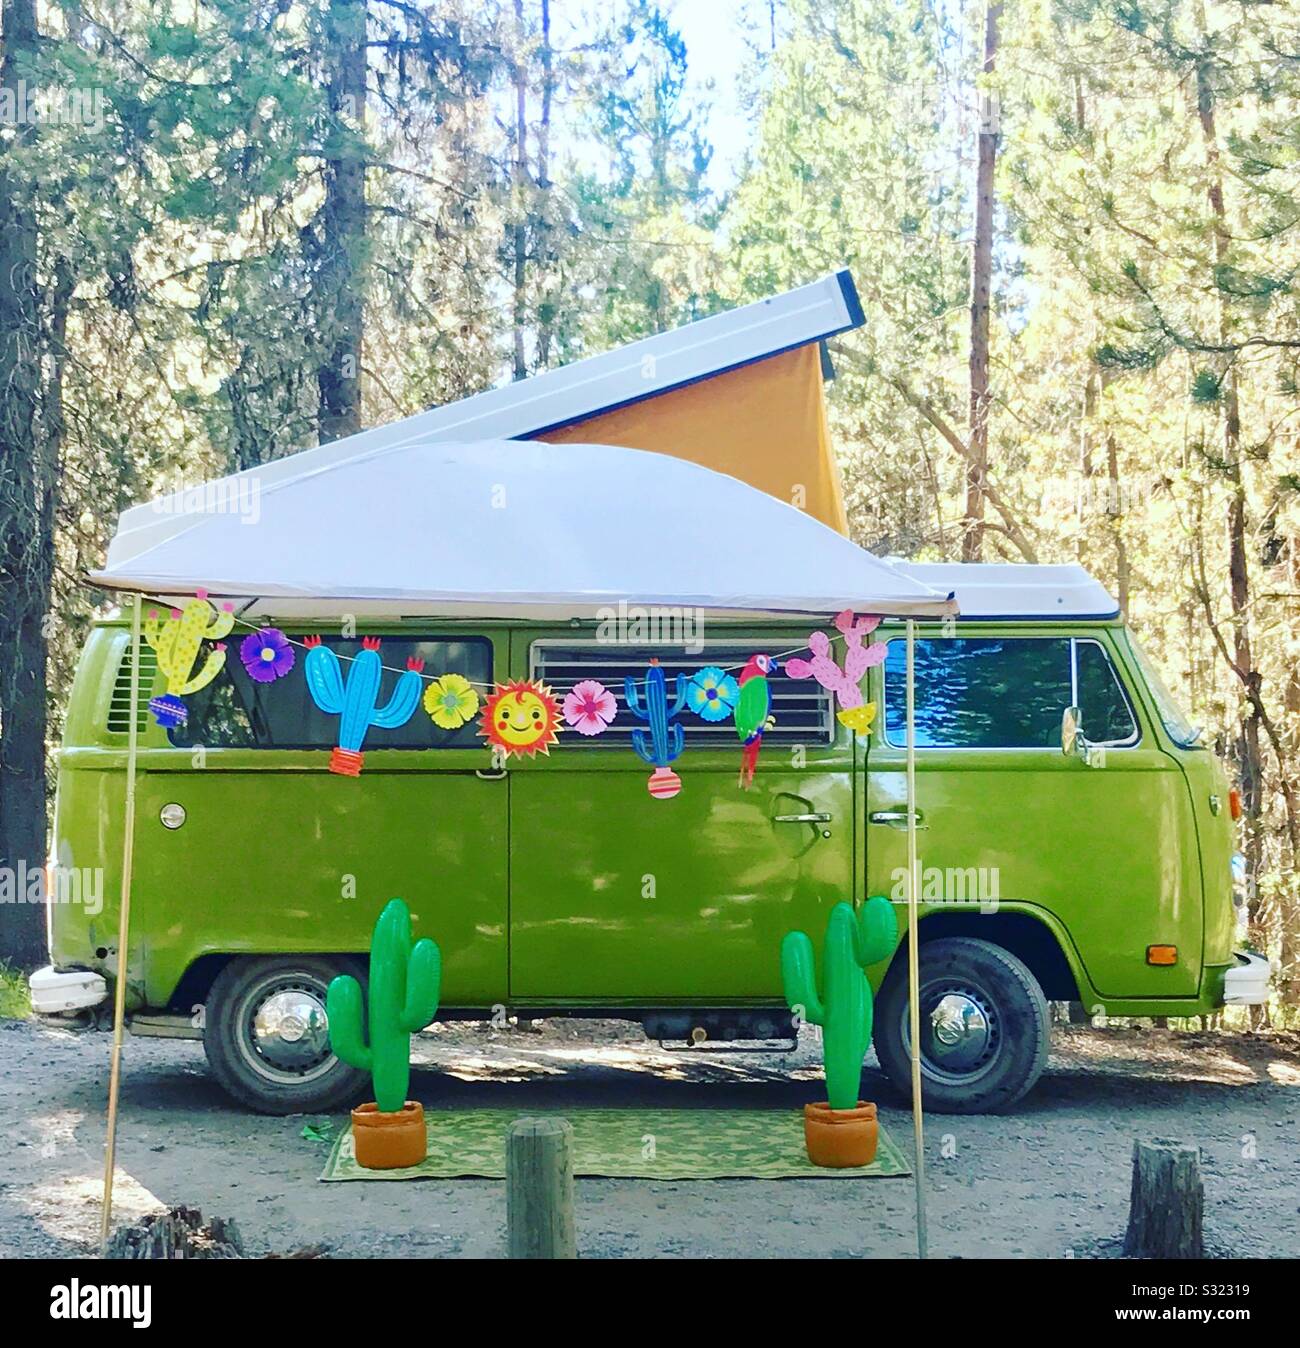 Leerling meten Fruitig VW bus camper van pop up cactus party at campground Stock Photo - Alamy